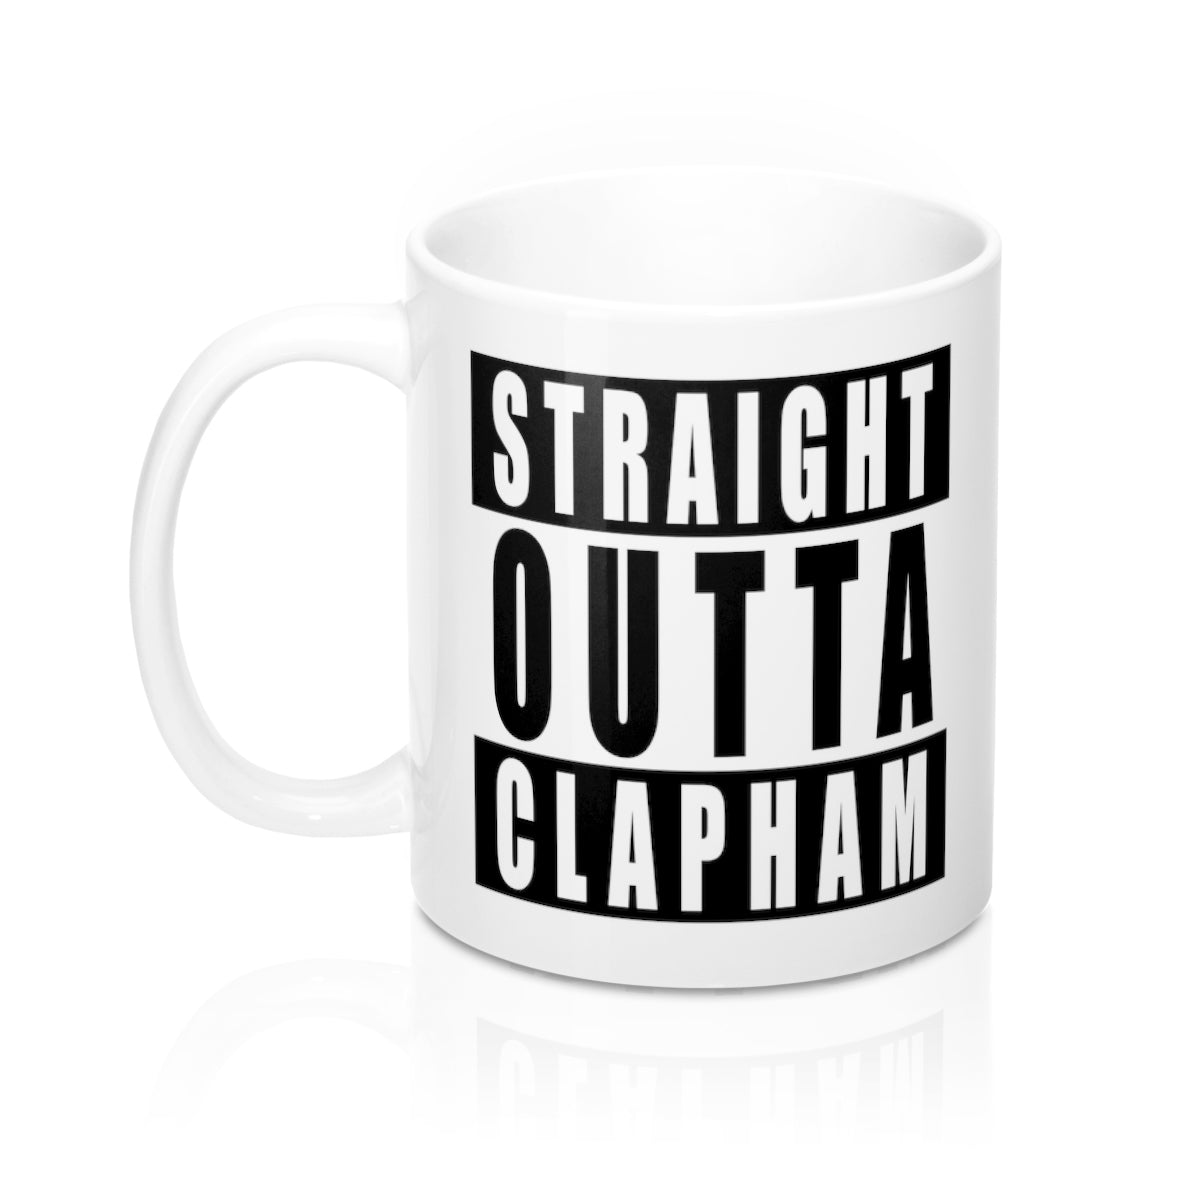 Straight Outta Clapham Mug